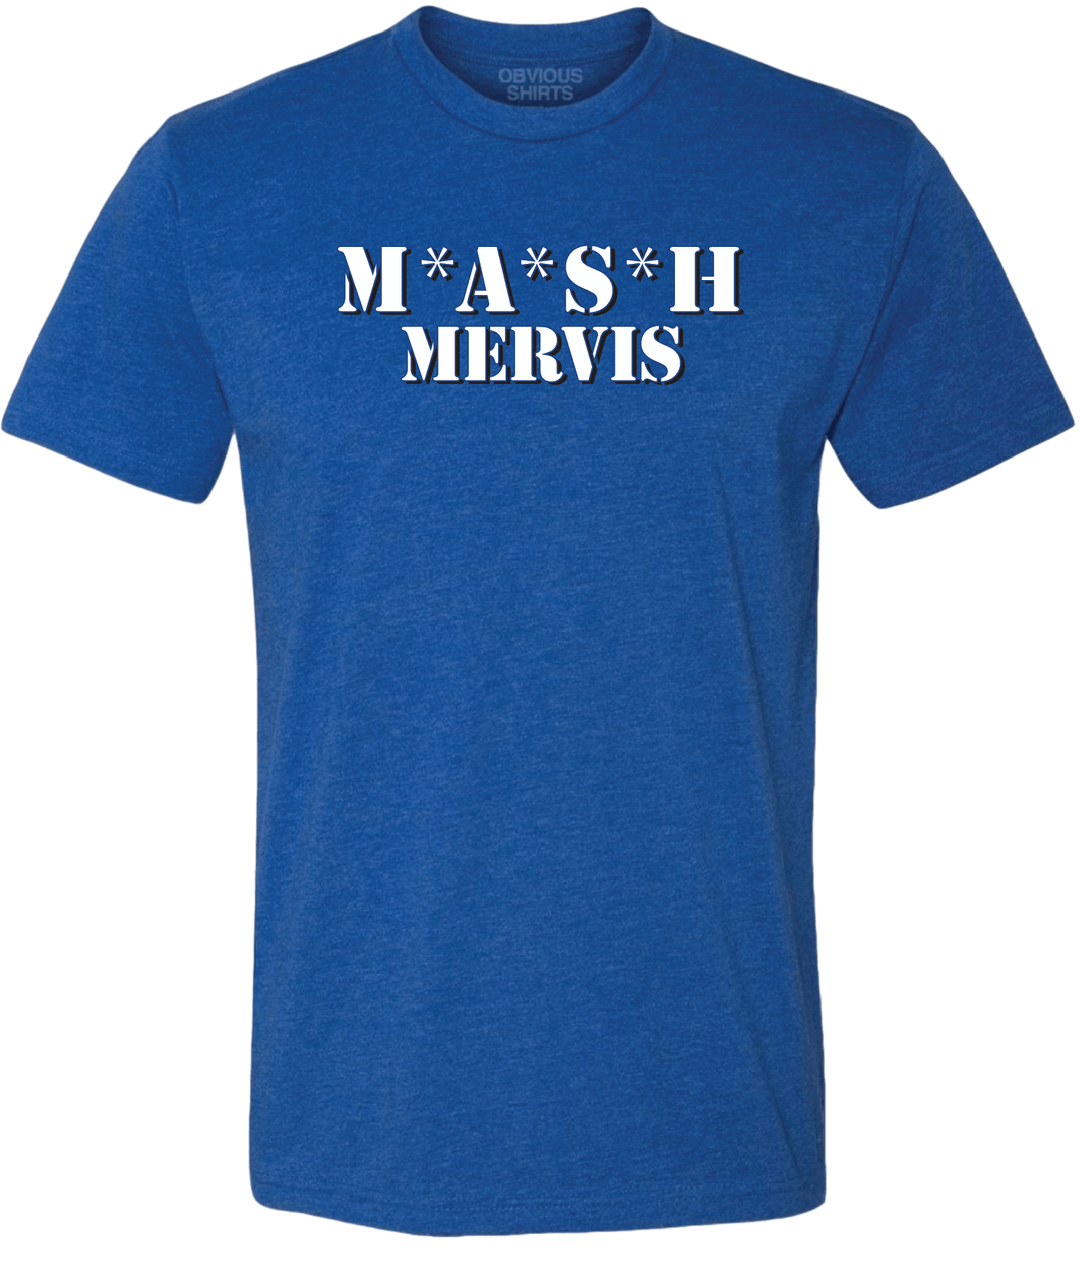 MASH MERVIS. (BLUE) - OBVIOUS SHIRTS